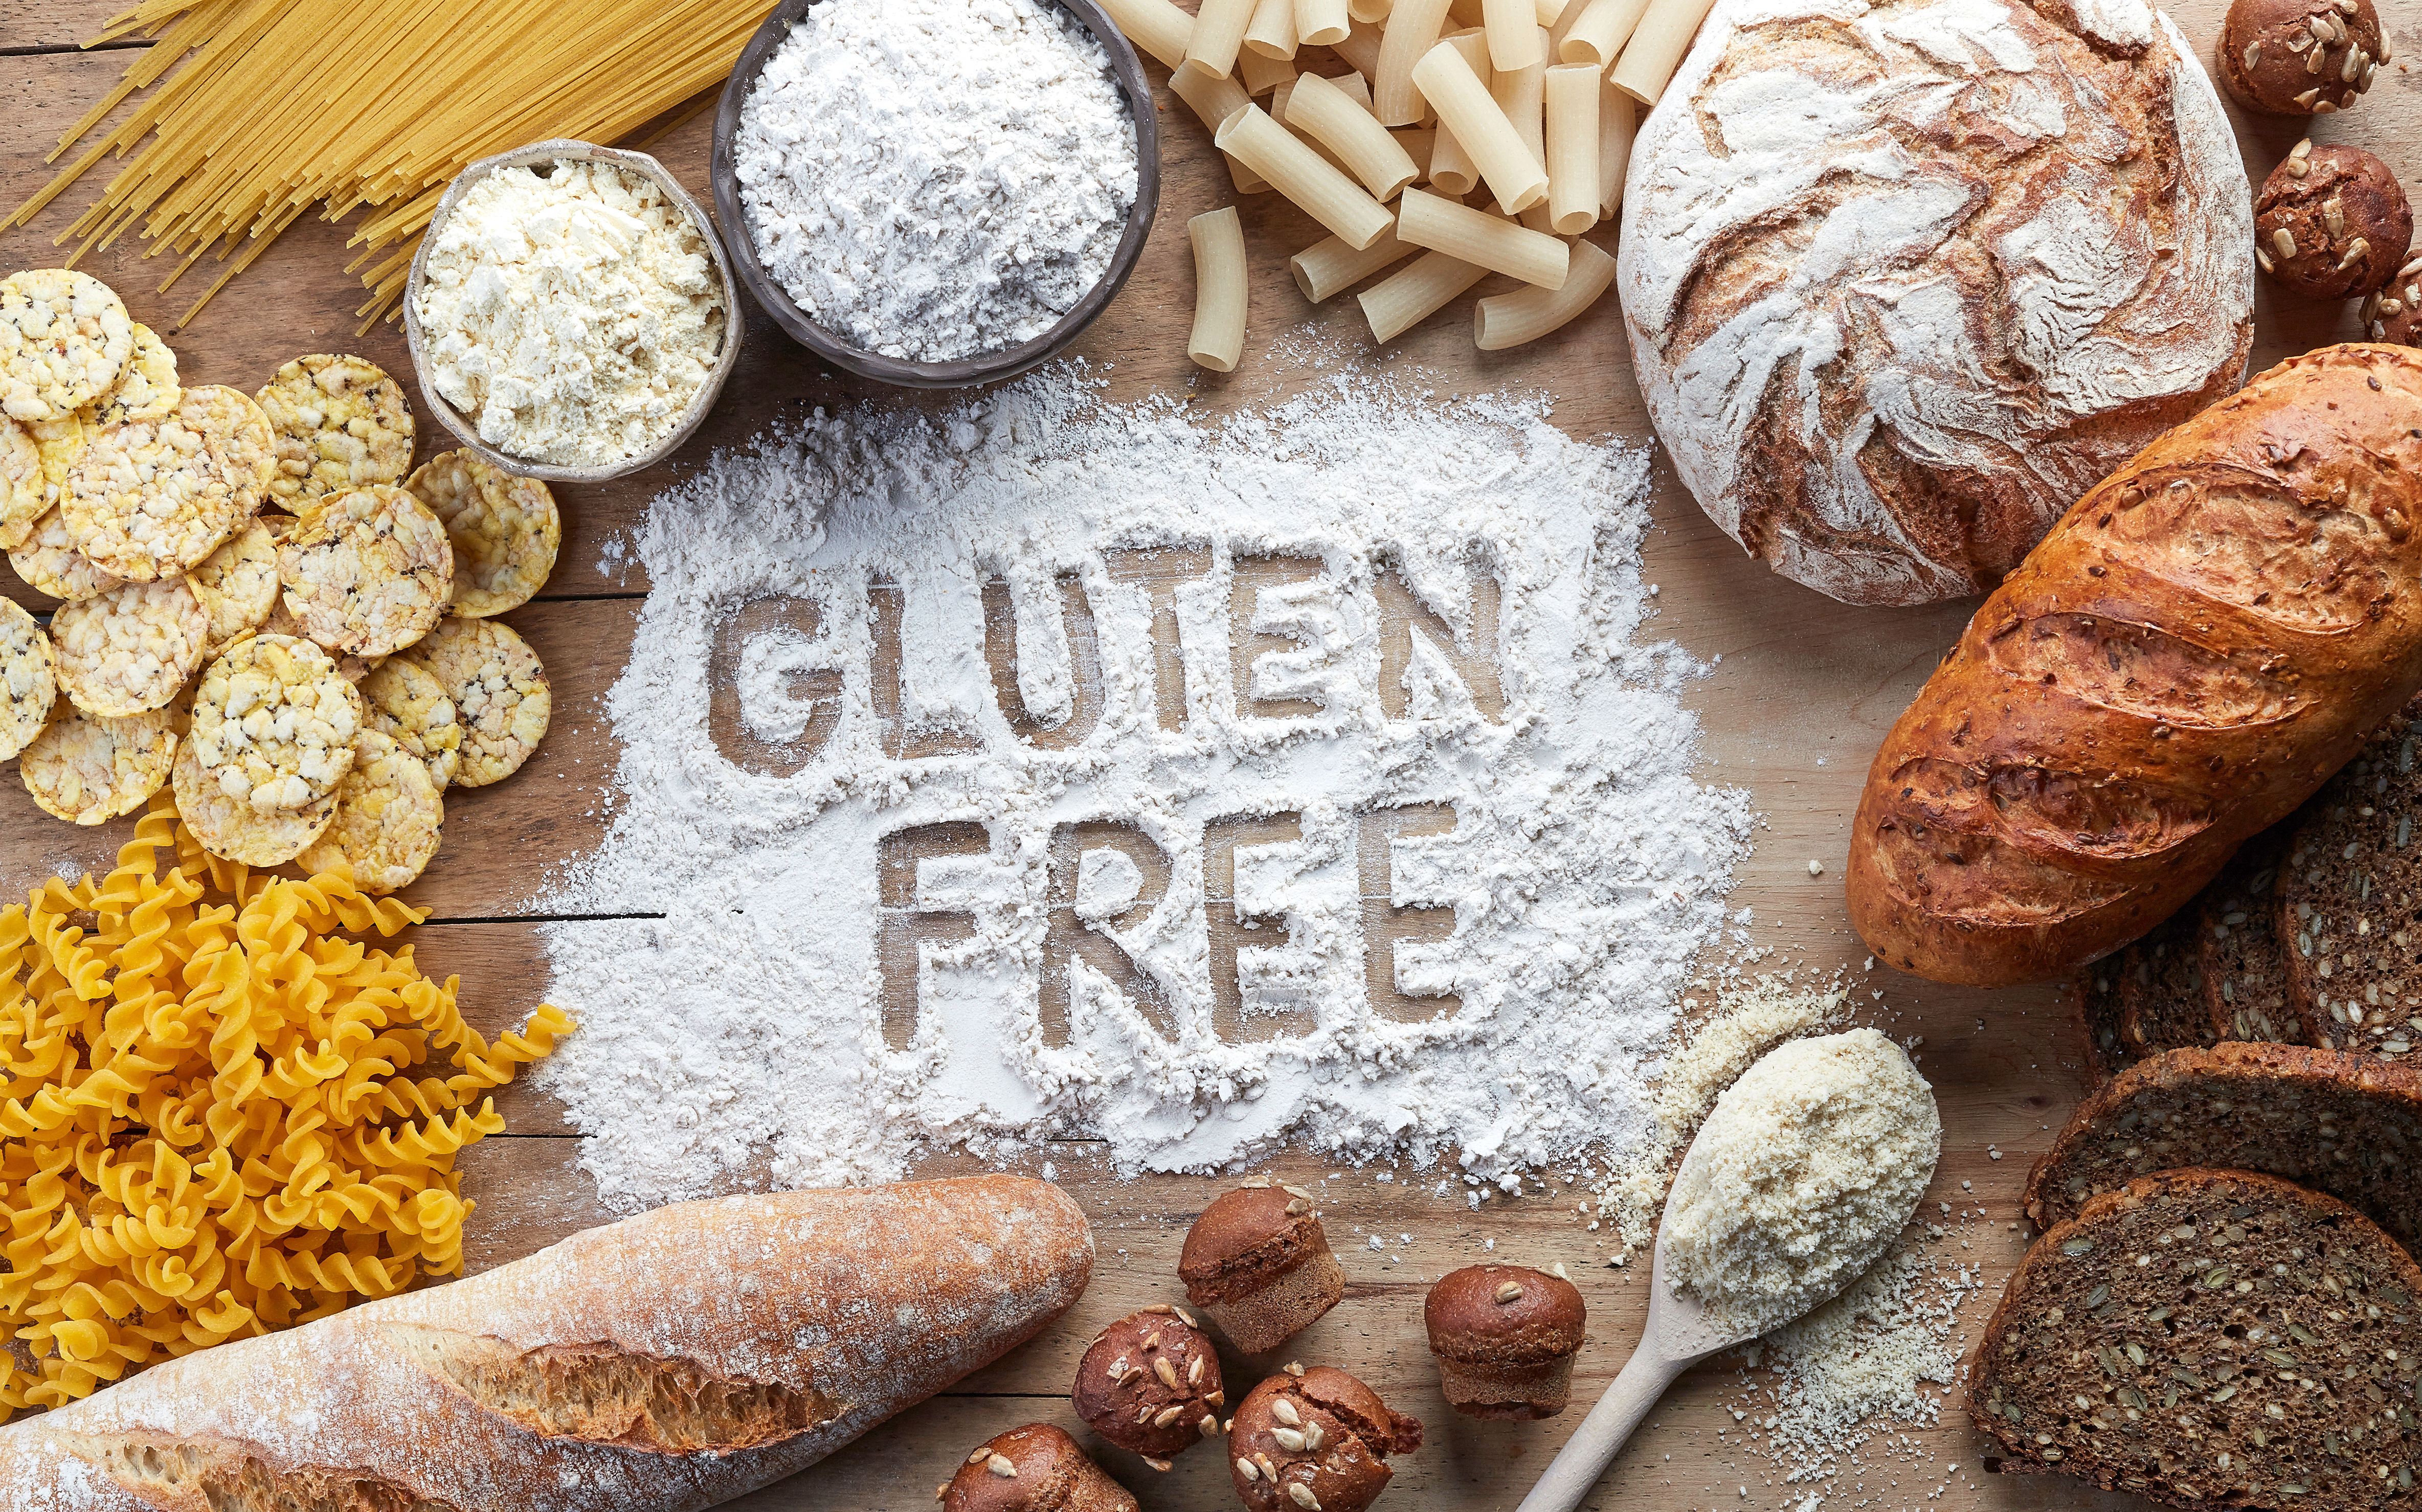 gluten free food